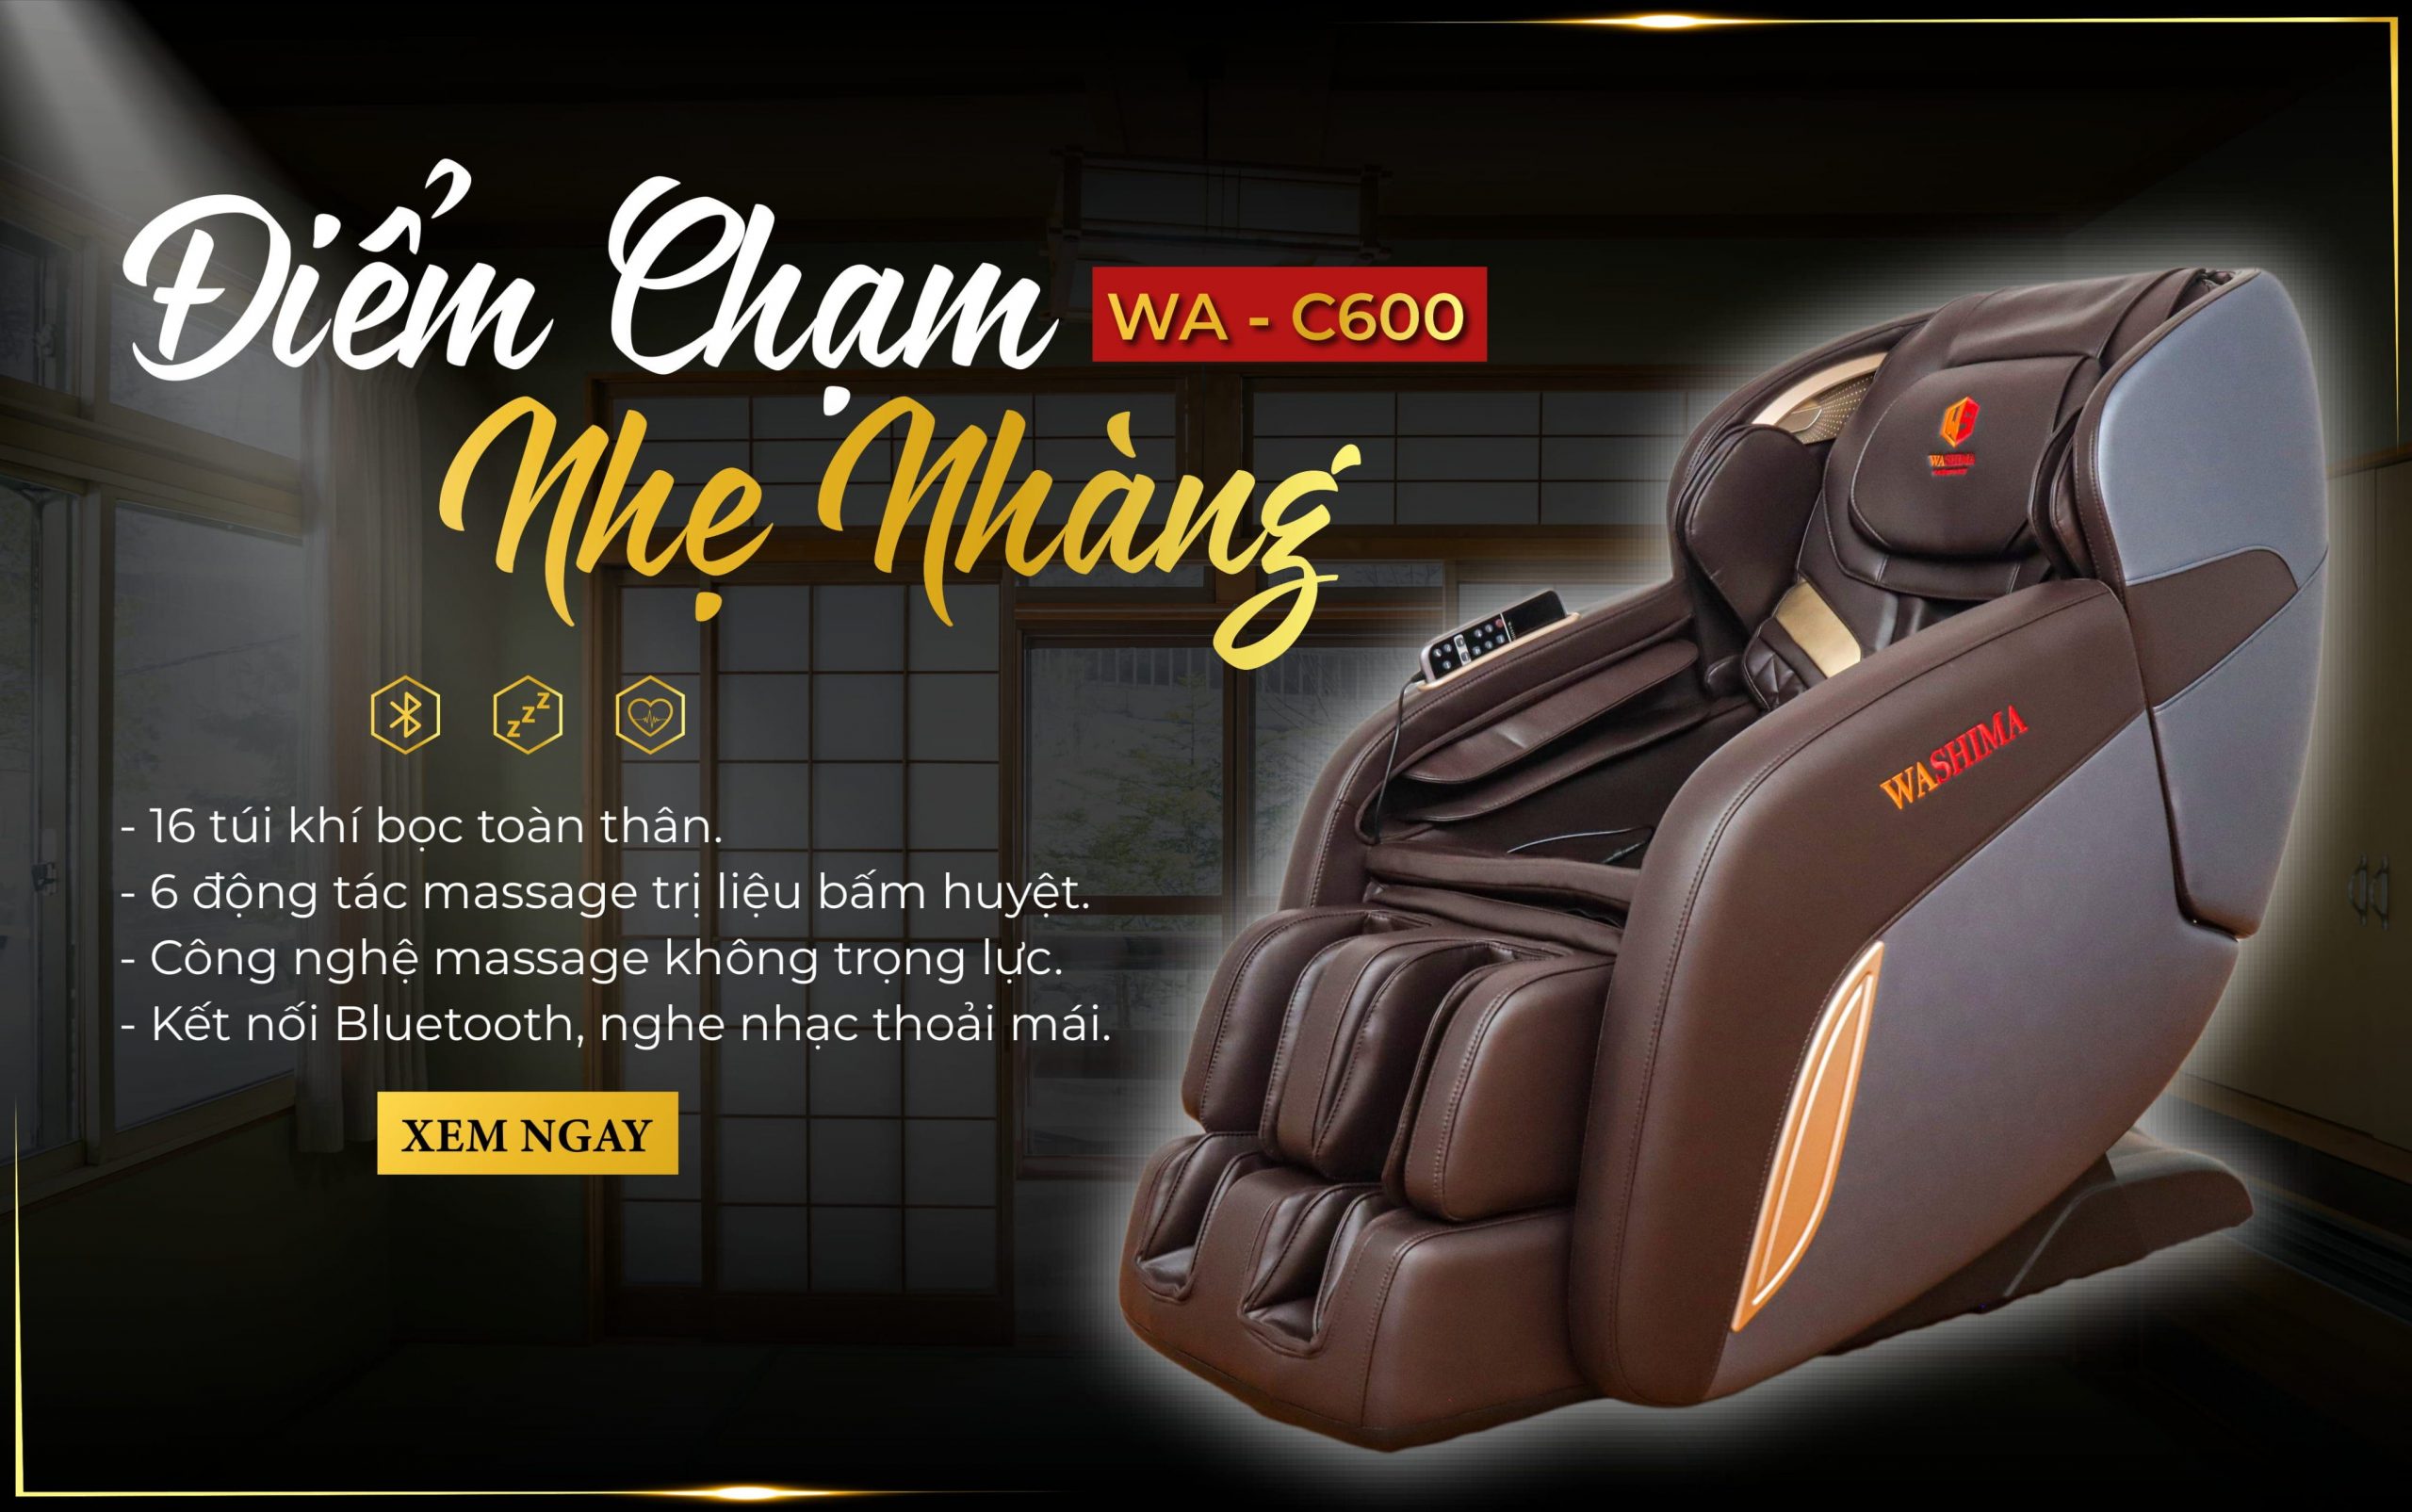 San Pham Ghe Massage Wa C600 Diem Cham Nhe Nhang